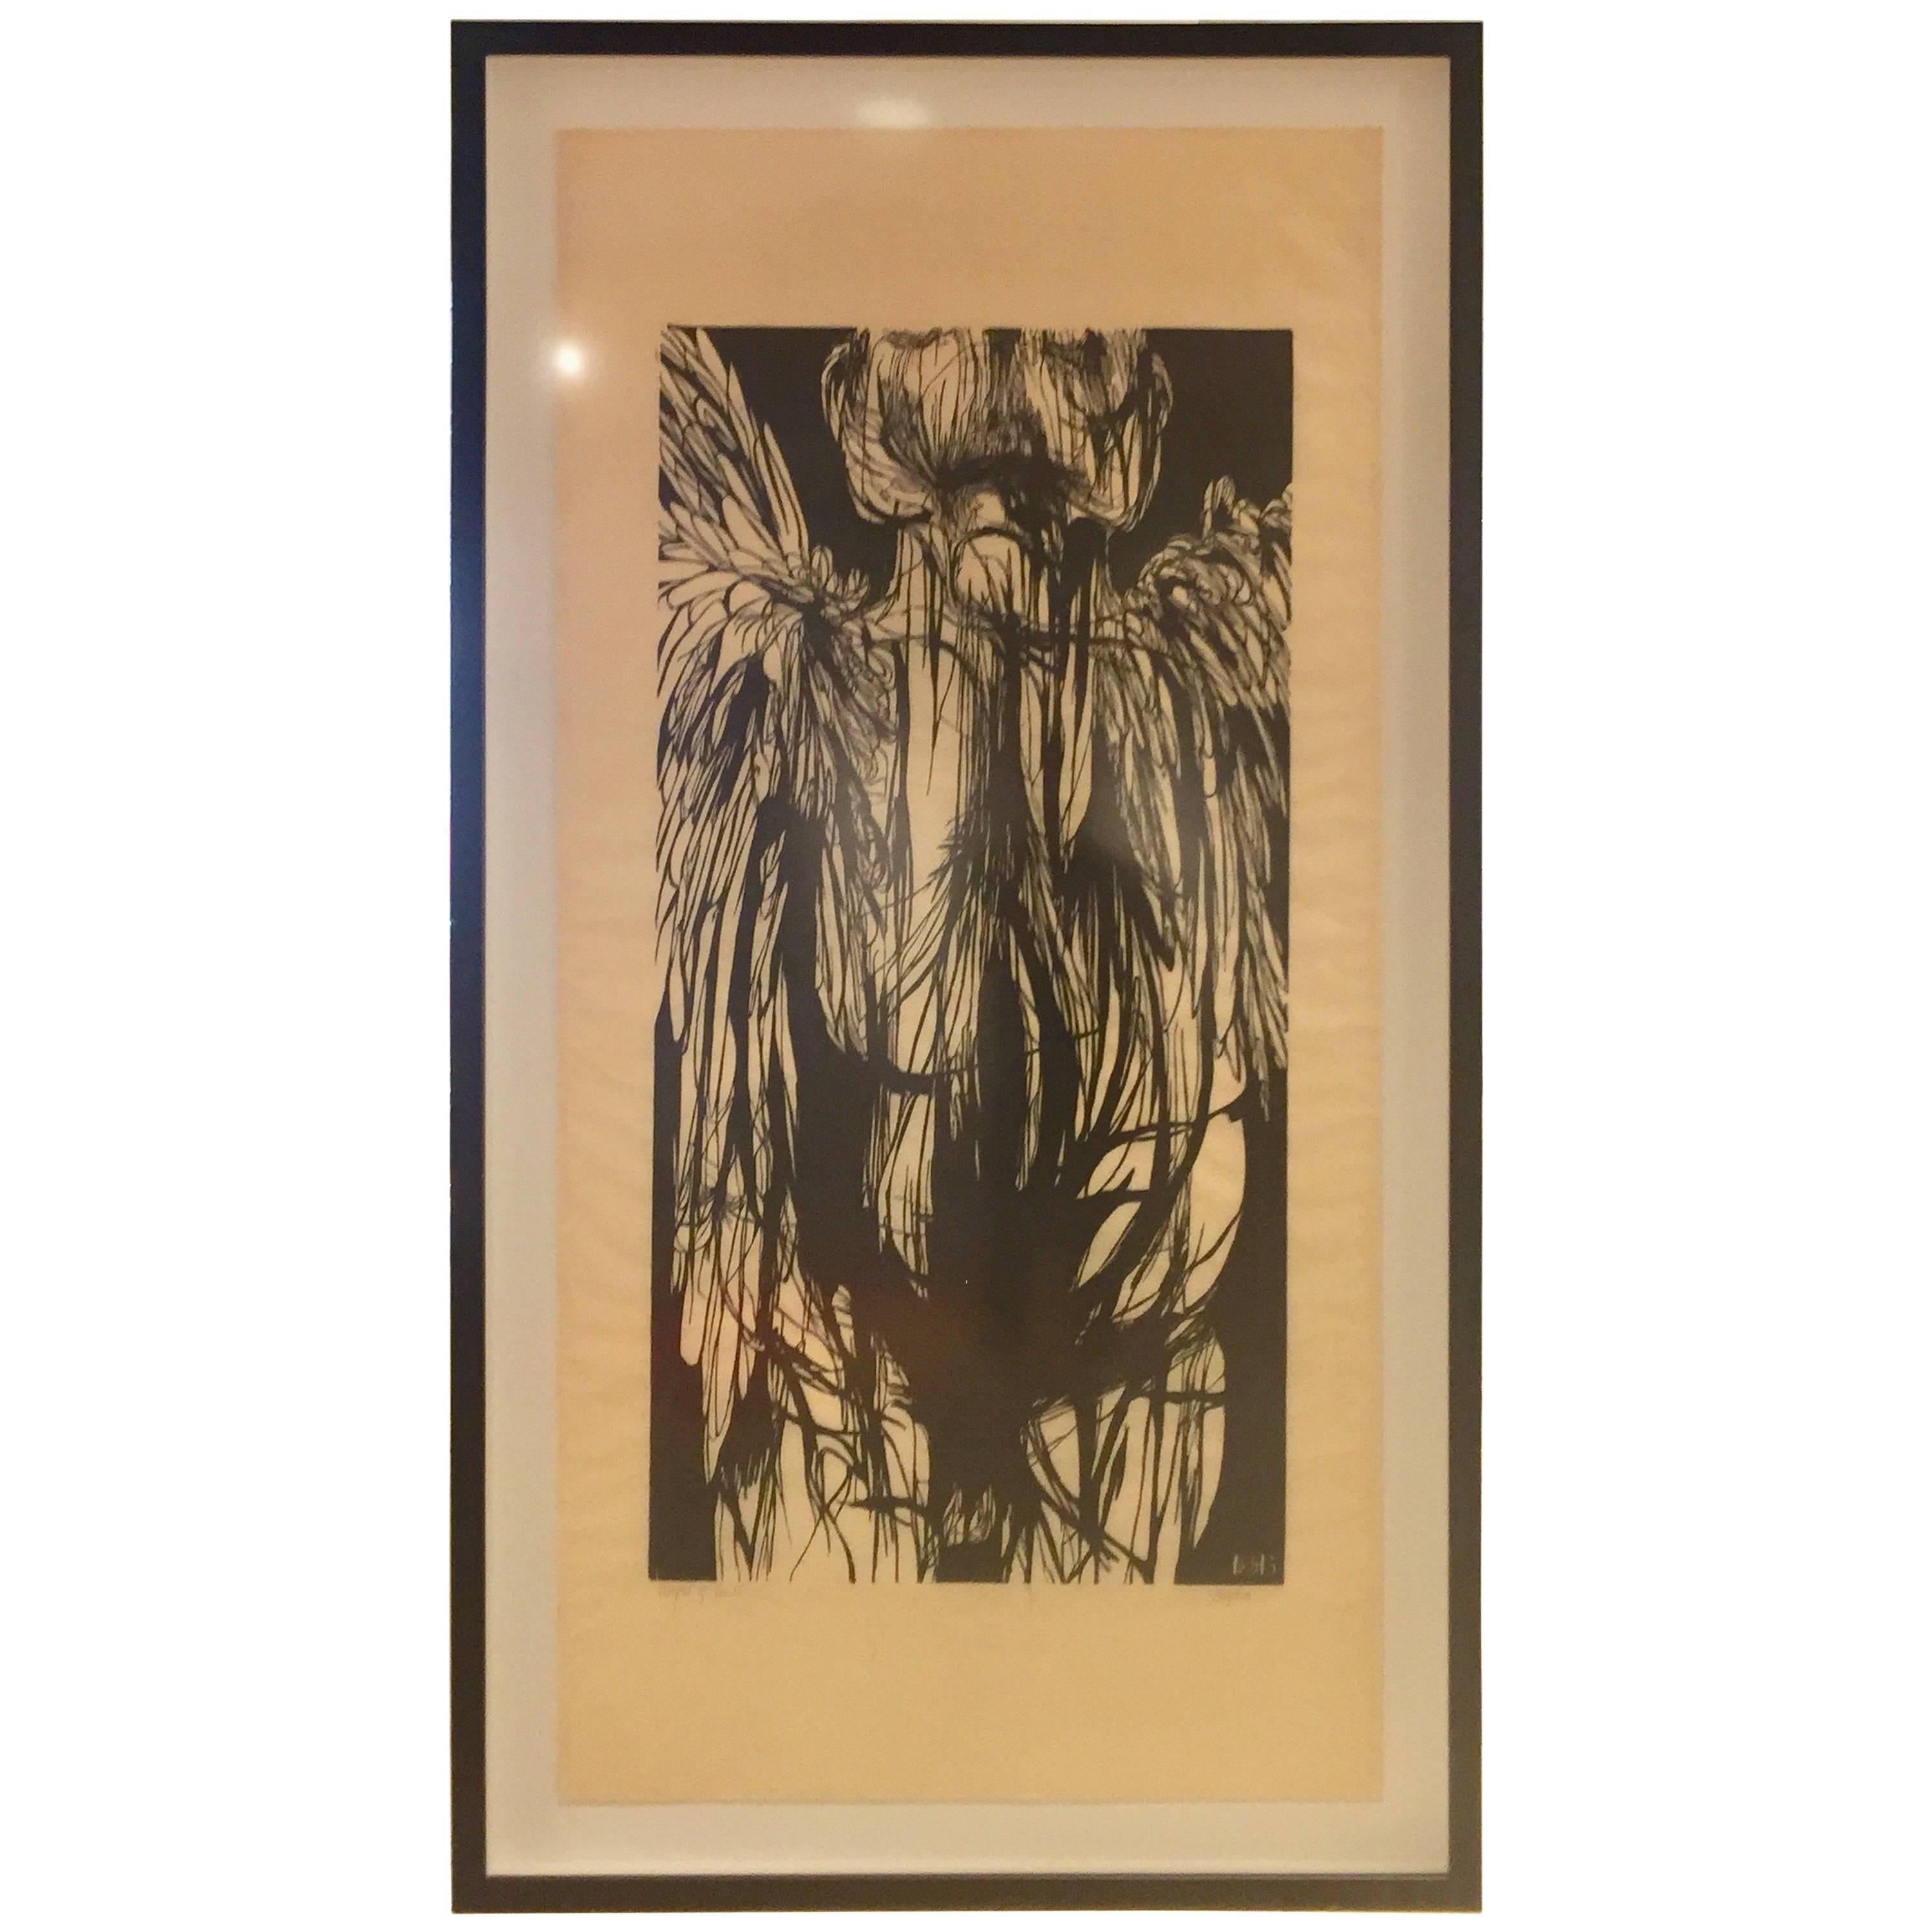 Large Leonard Baskin Woodcut "Angel of Death"